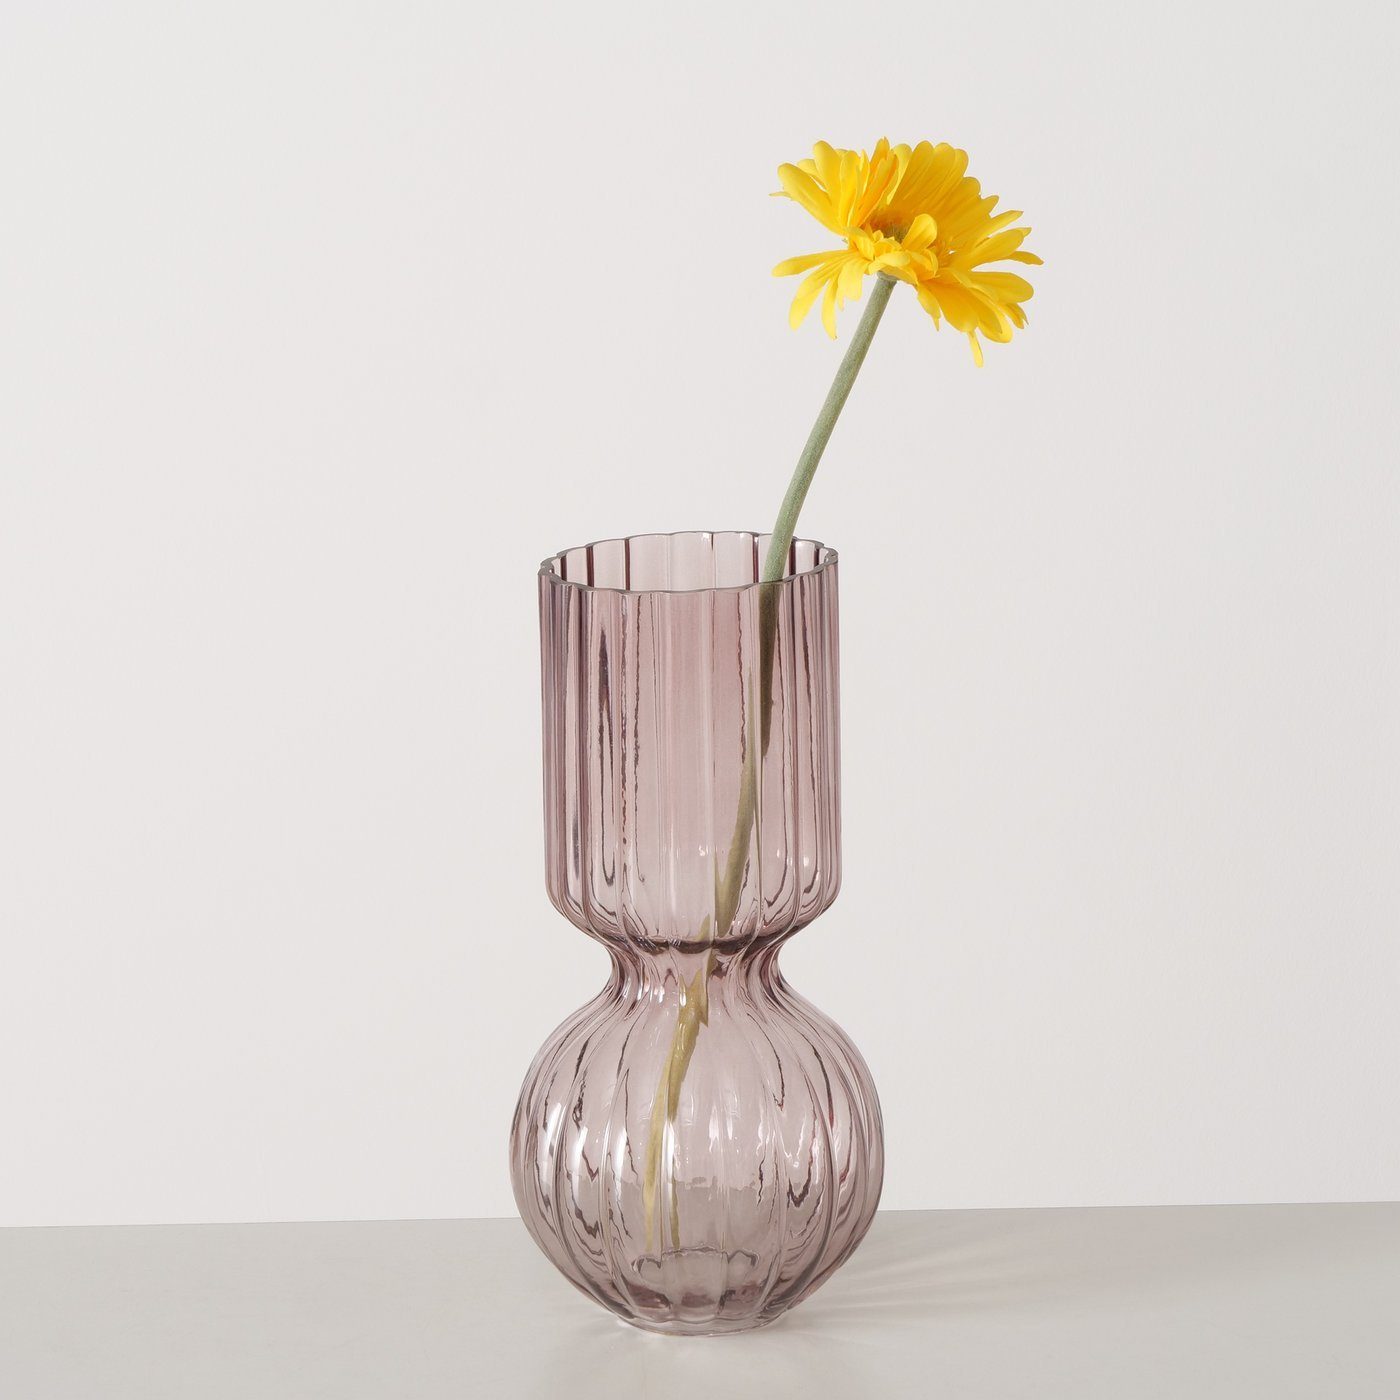 BOLTZE Dekovase "Kalea" aus Glas H30cm, dukelrosa in Vase